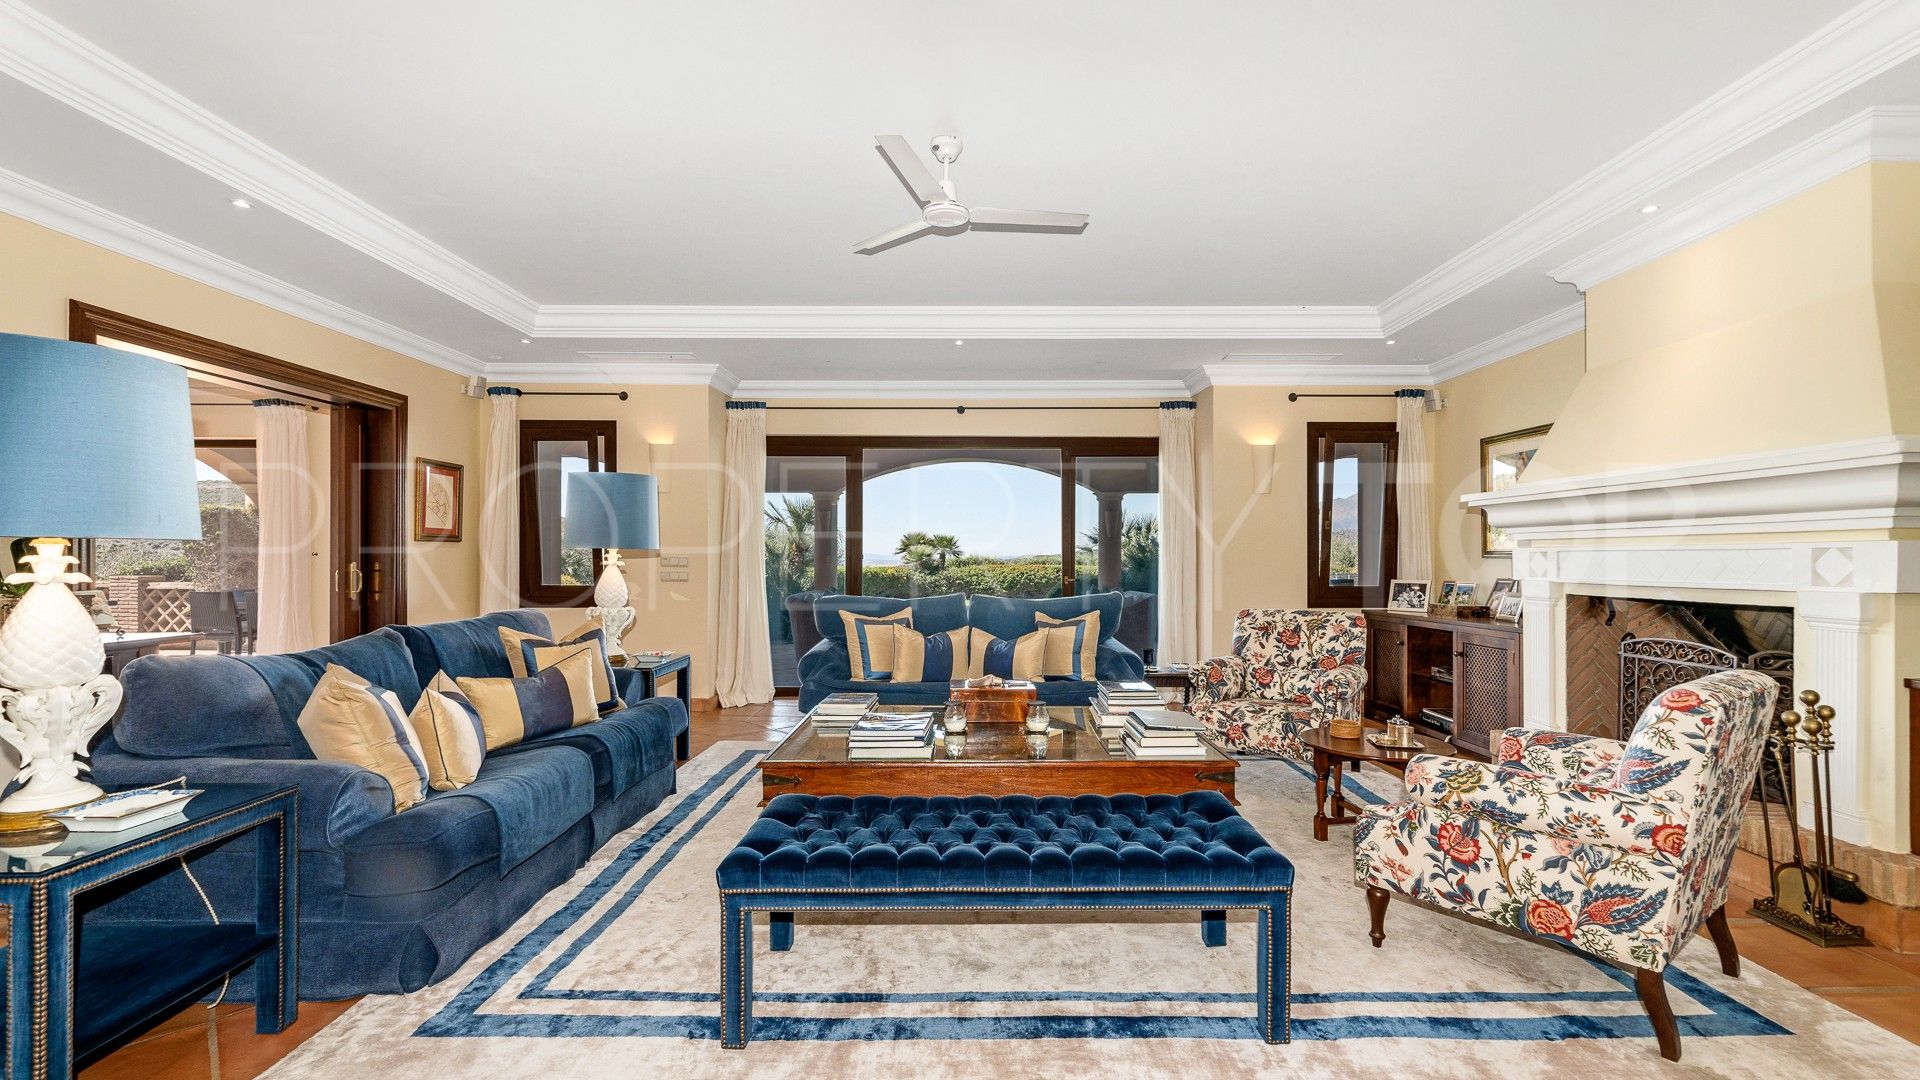 6 bedrooms villa for sale in Marbella Club Golf Resort